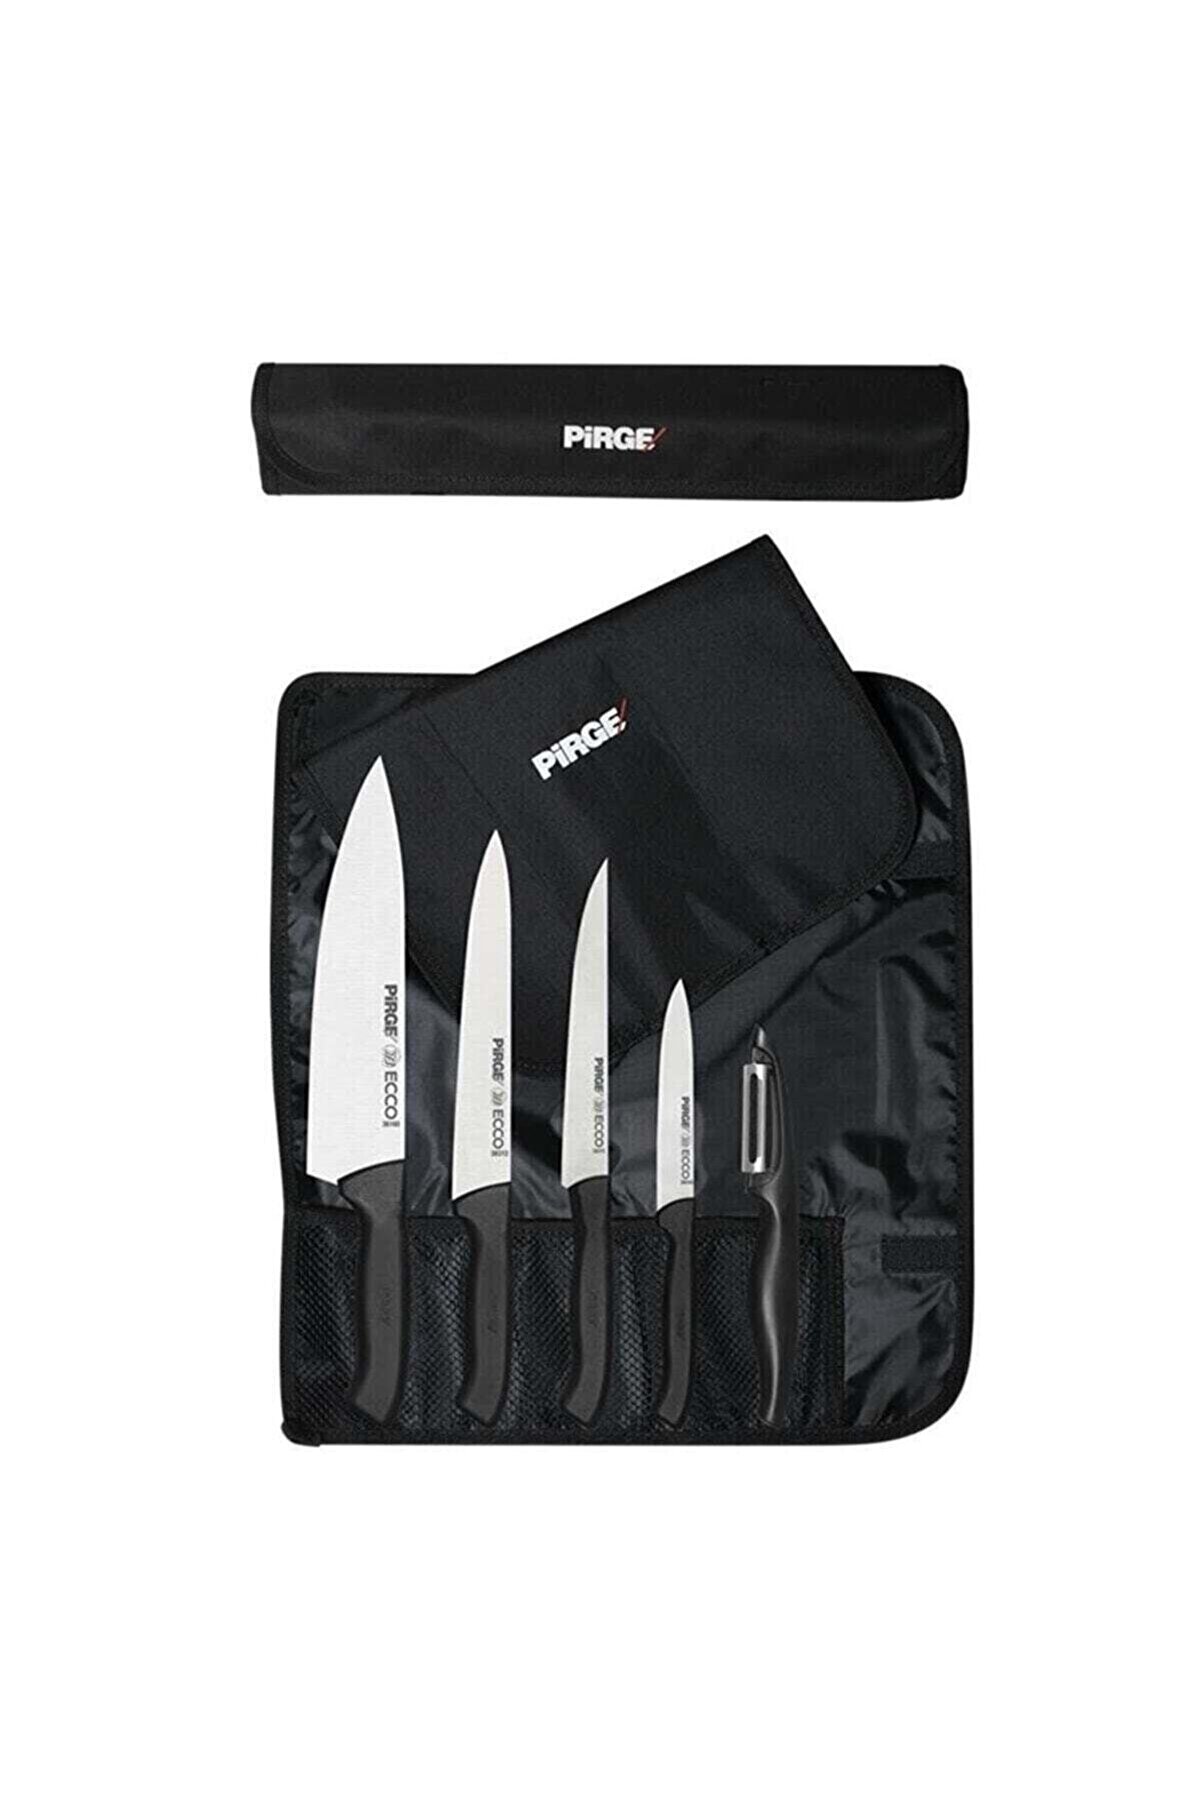 Pirge Ecco Çantalı 5'li Bıçak Seti 38402